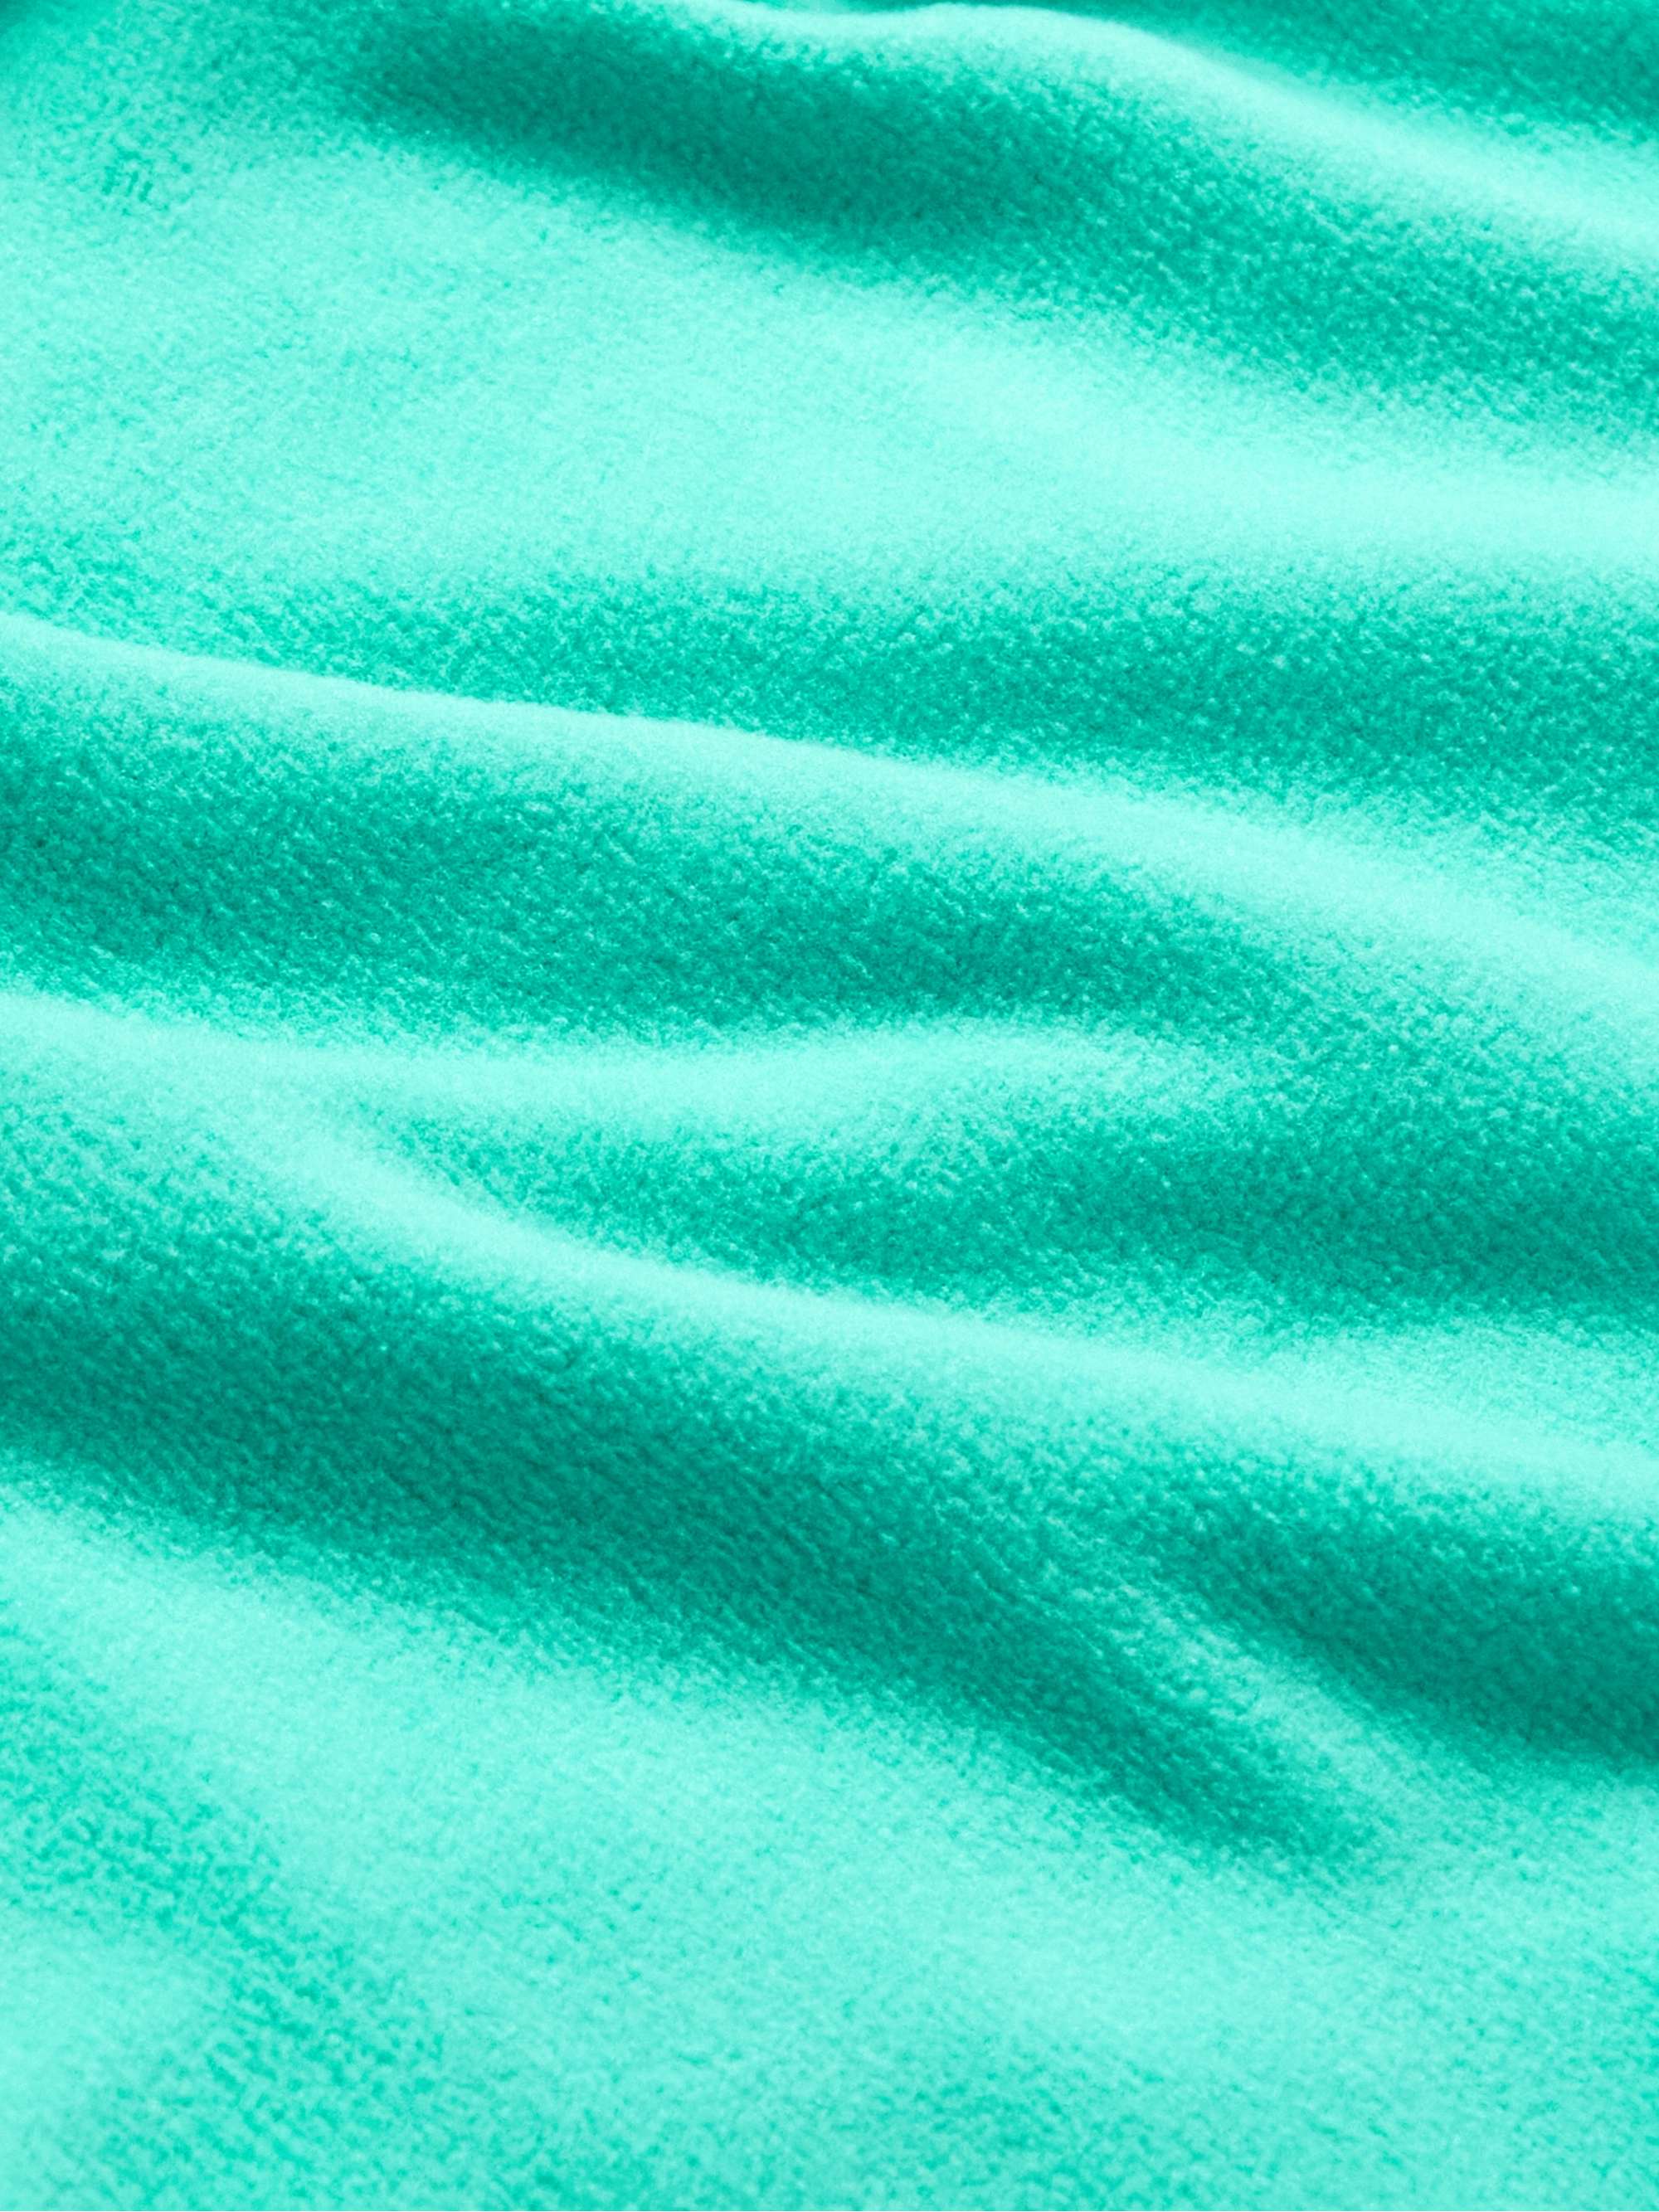 PATAGONIA Micro D Snap-T Recycled Fleece Sweatshirt